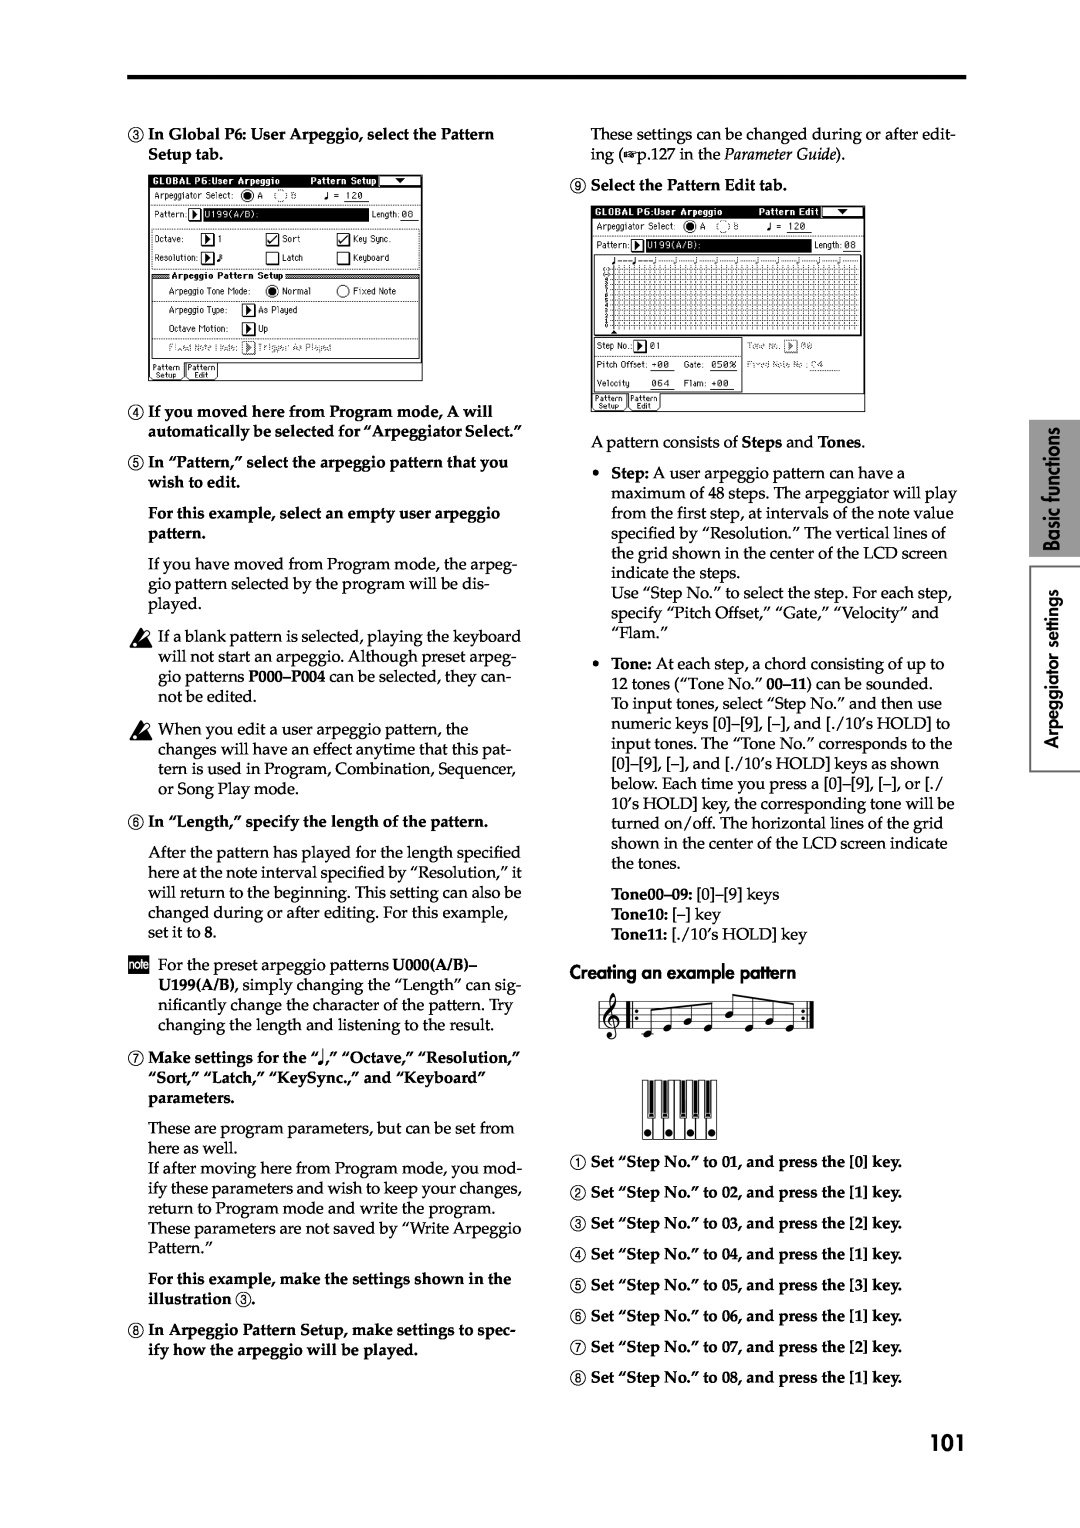 Korg Speaker System owner manual Creating an example pattern, Arpeggiator settings Basic functions 